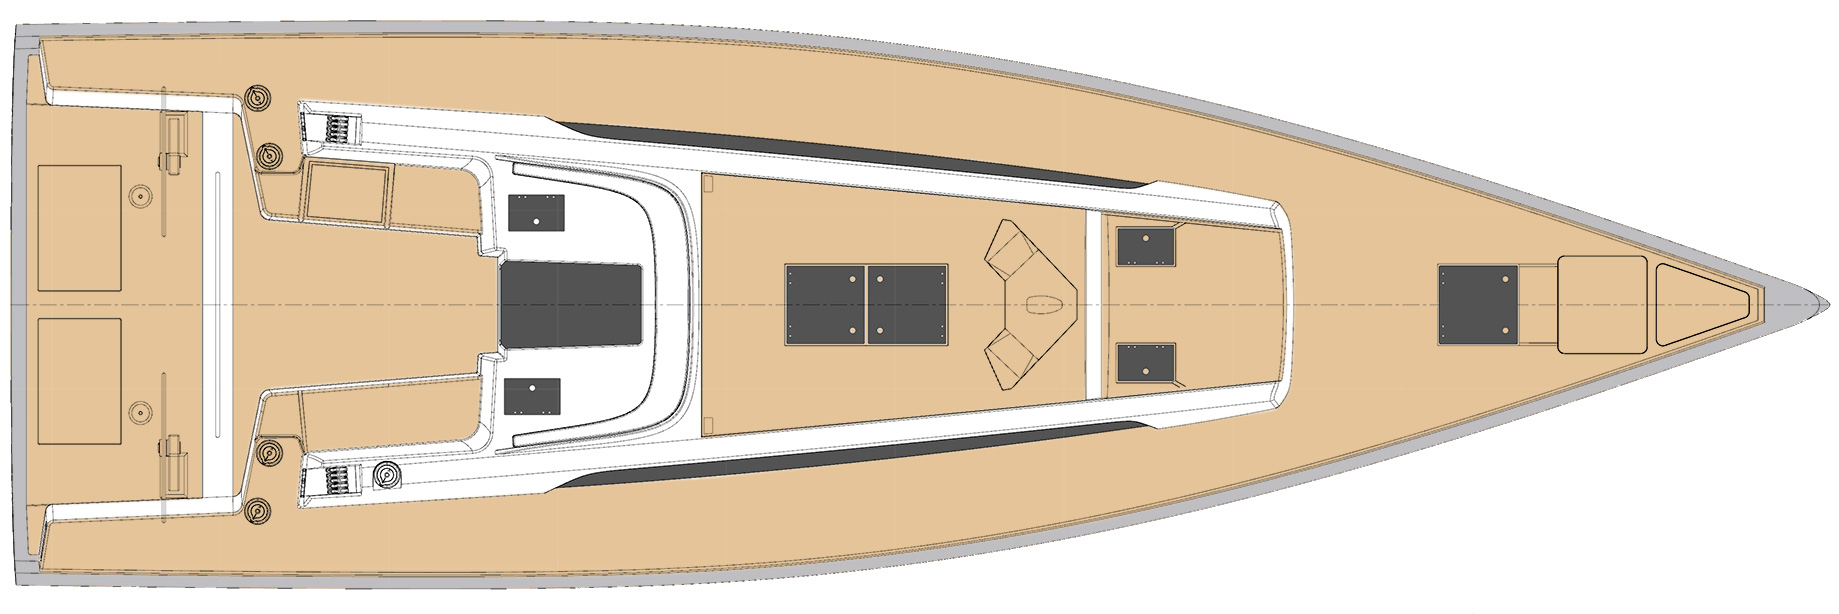 solaris yacht a motore